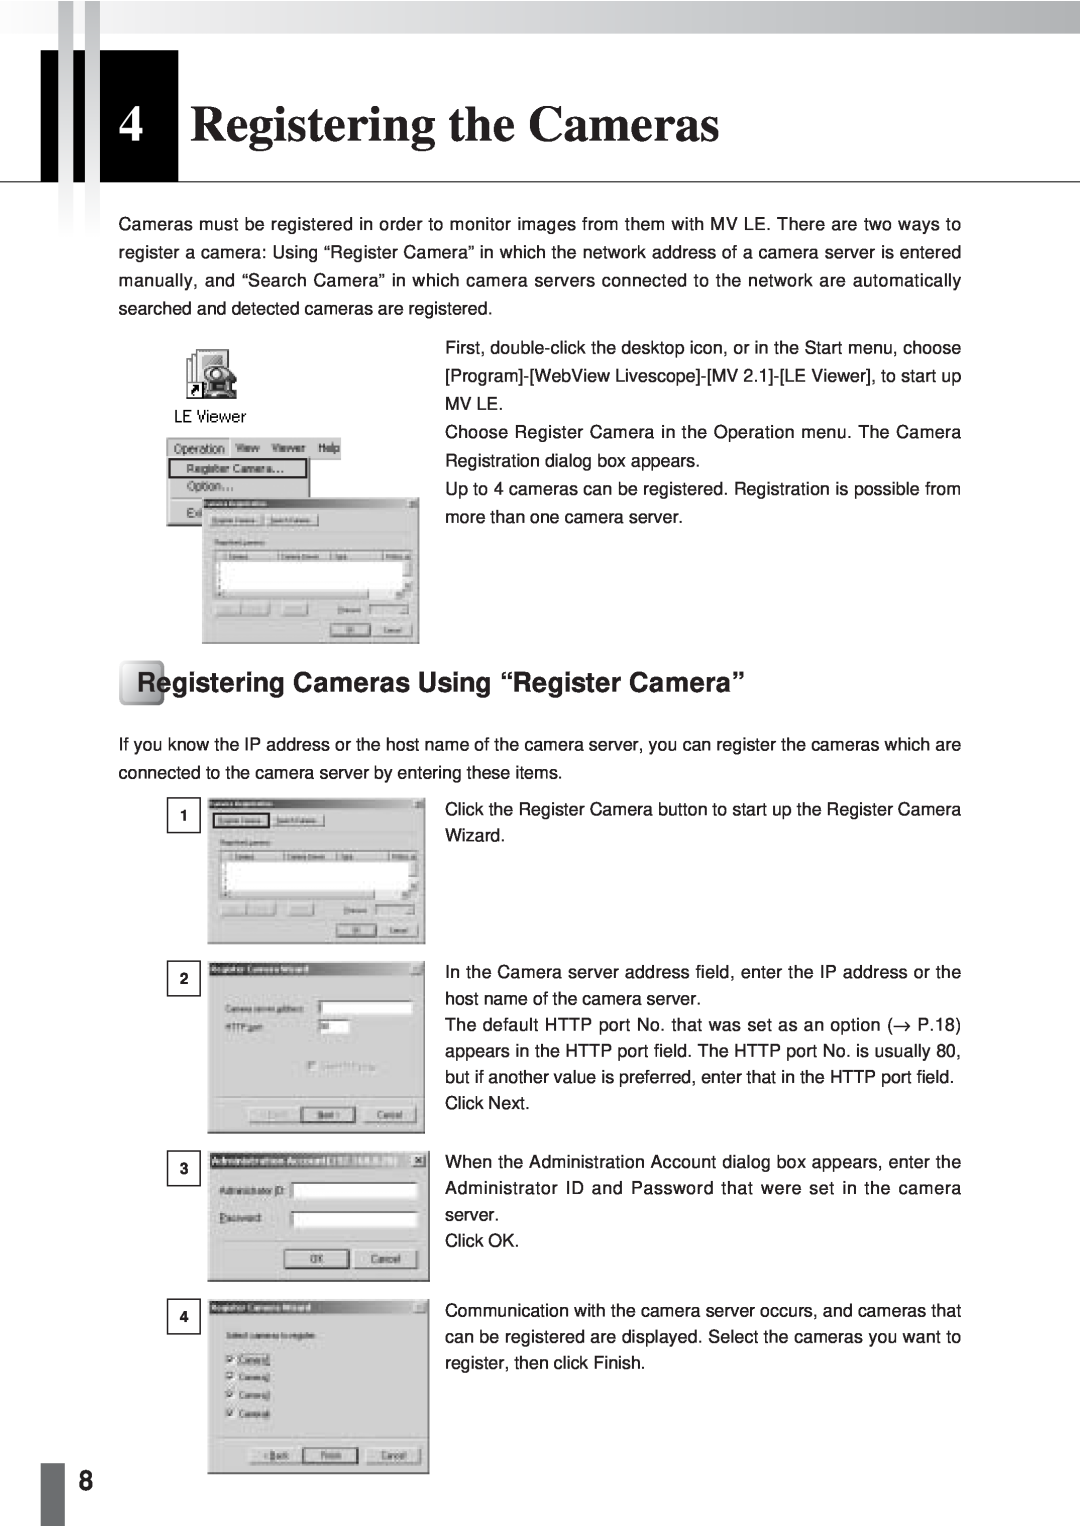 Canon 2.1 user manual 4Registering the Cameras, Registering Cameras Using “Register Camera” 